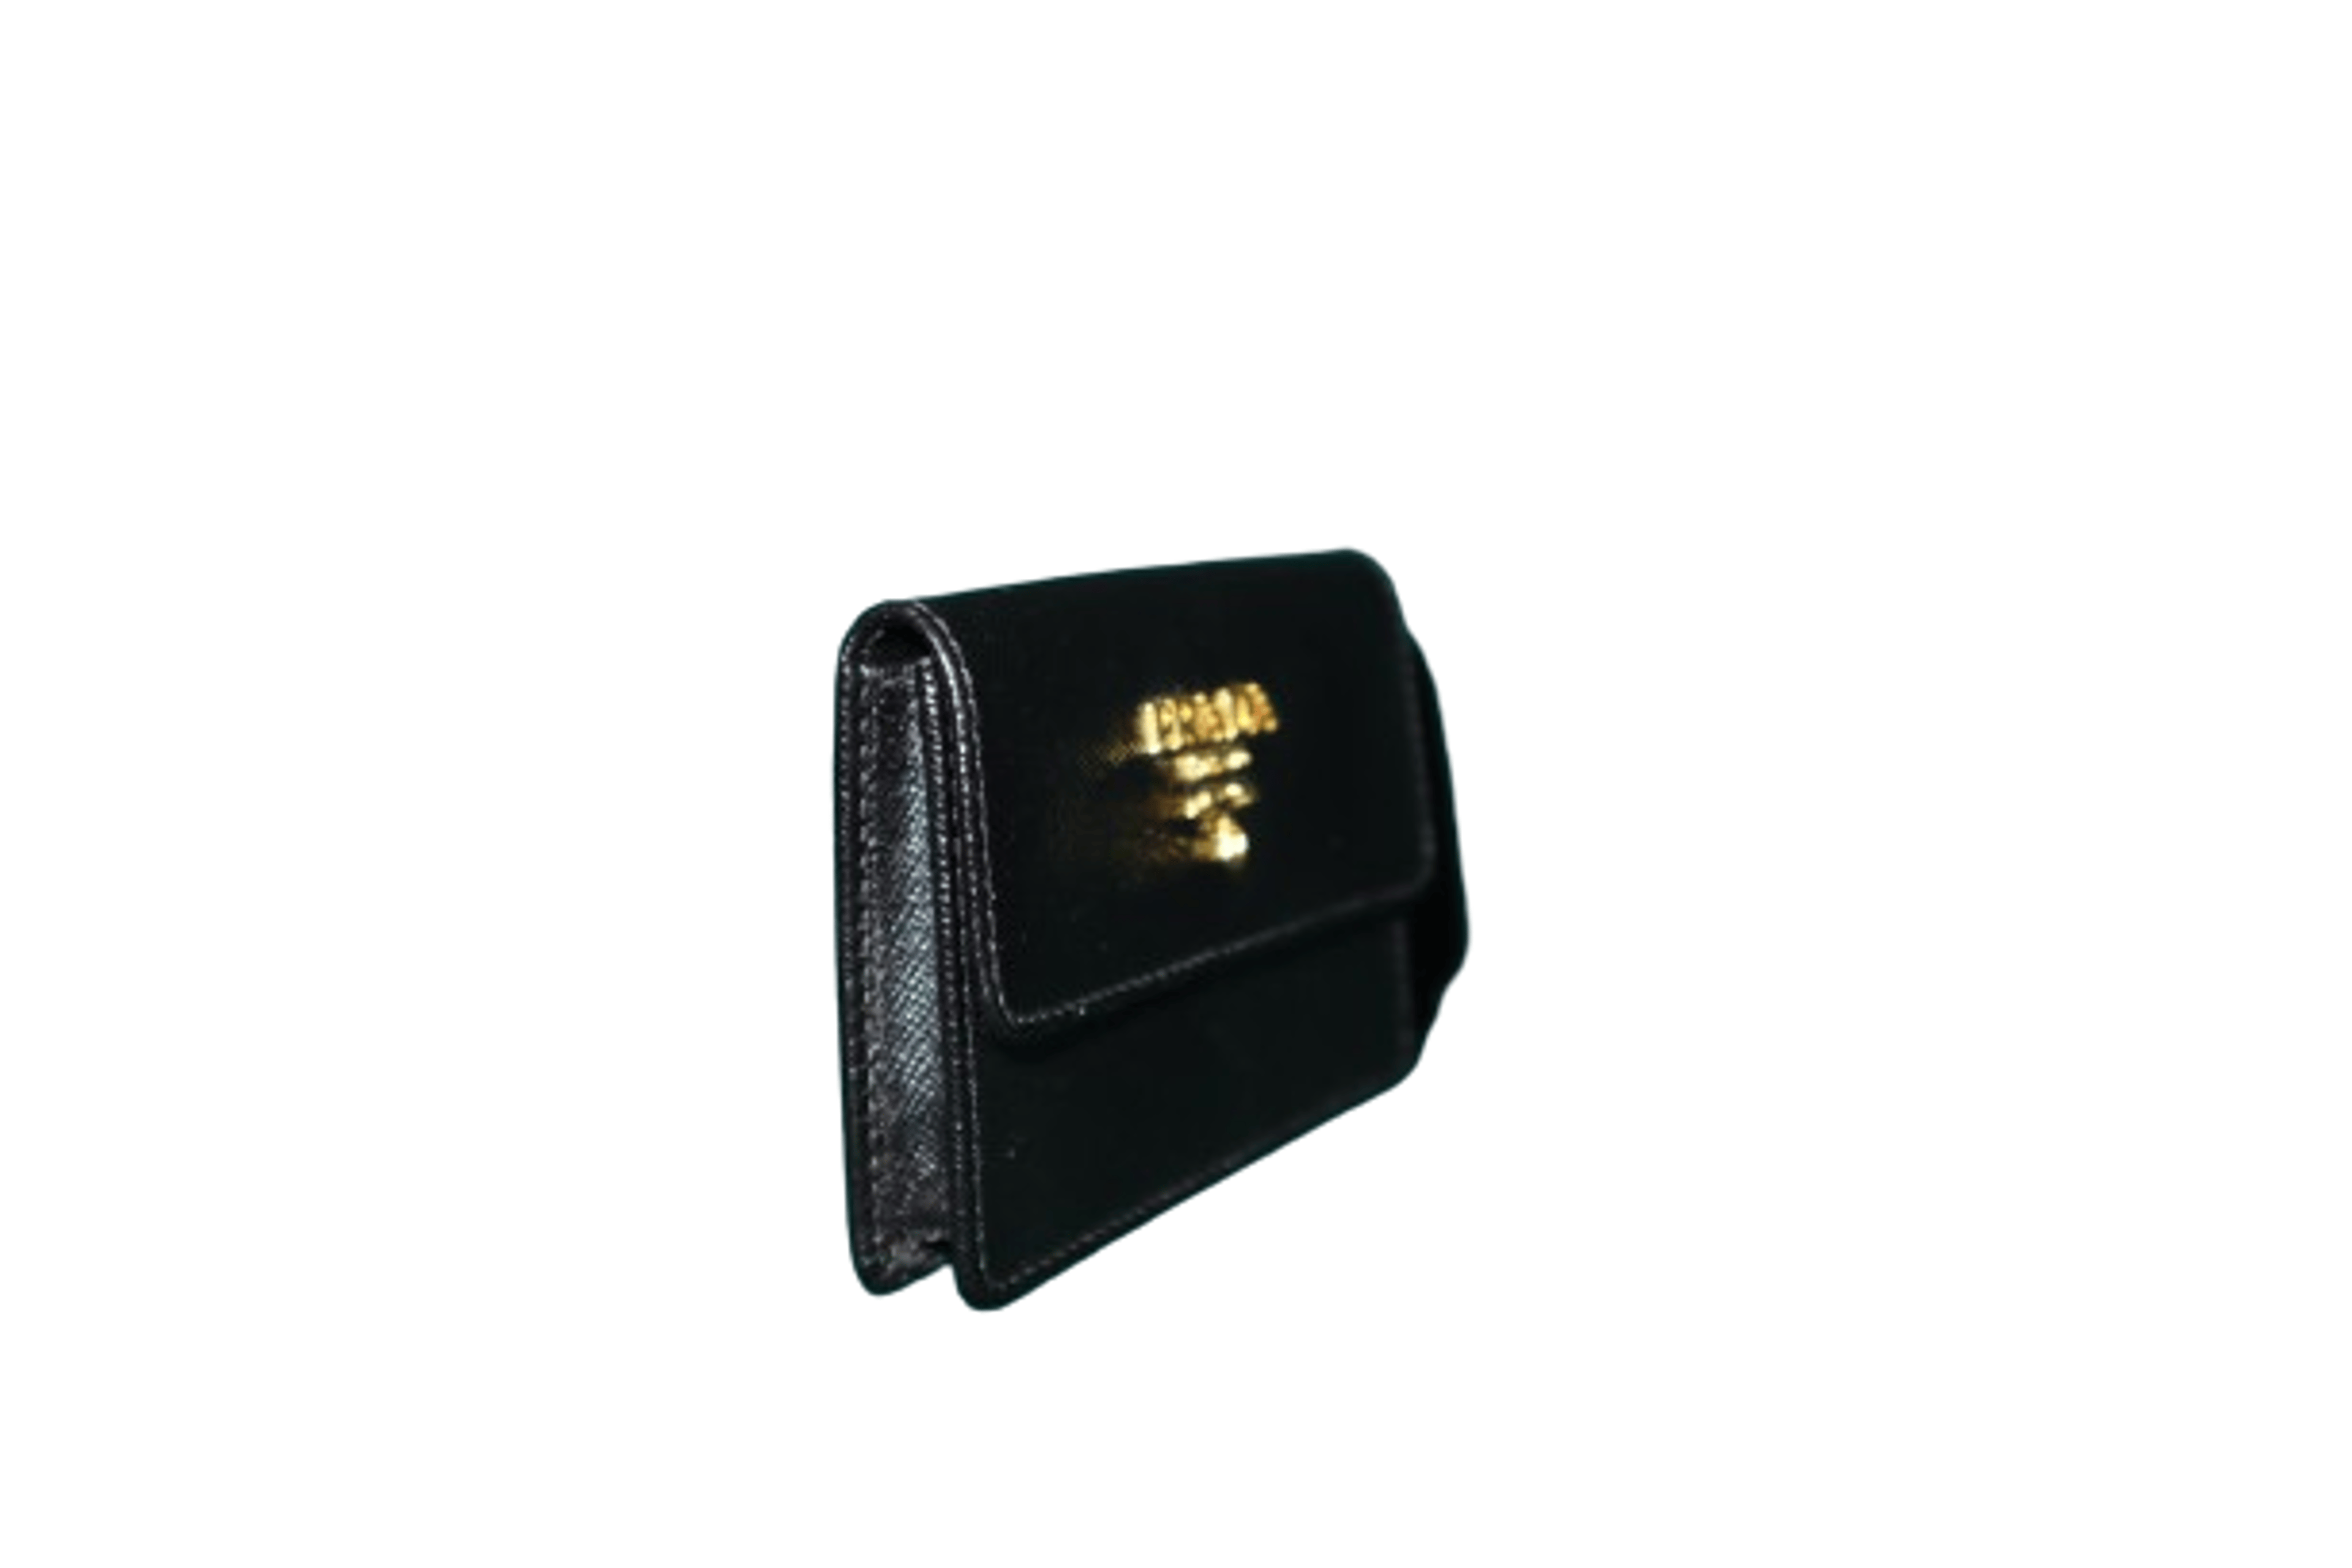 Alternate View 8 of Prada Black Saffiano Leather Flap Card Holder NEW